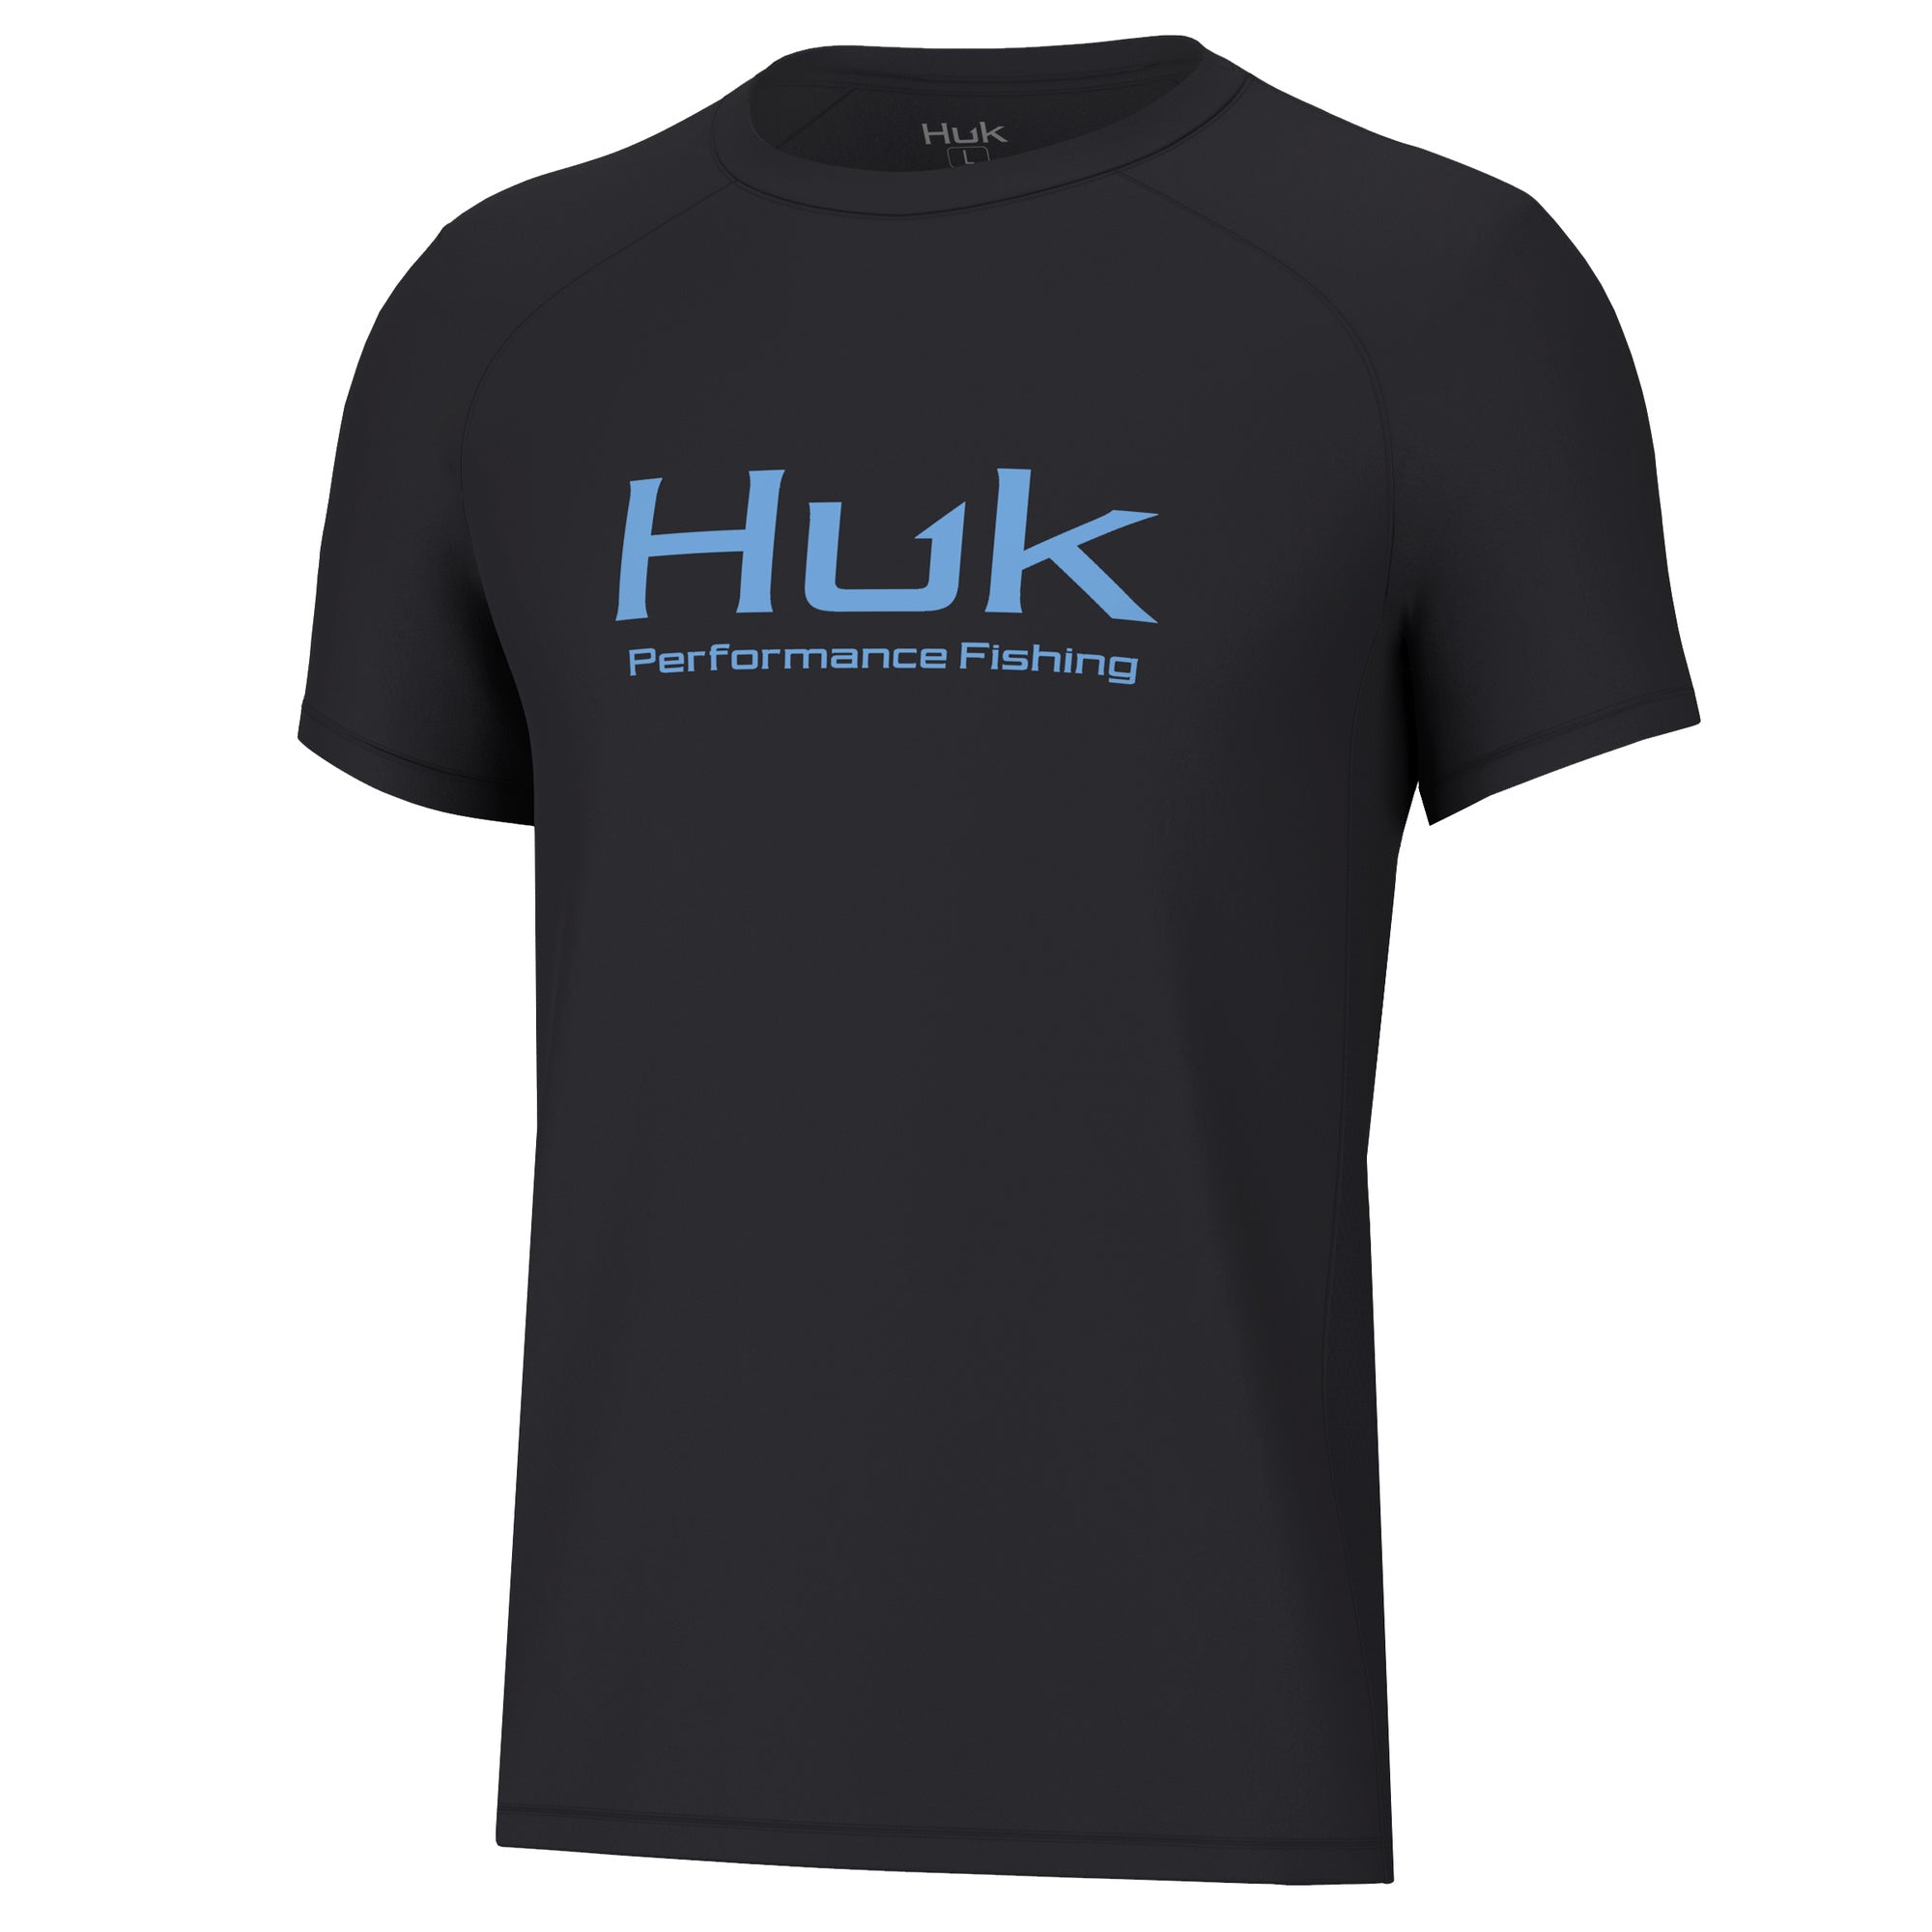 Huk Trucker Hats − Sale: at $22.99+